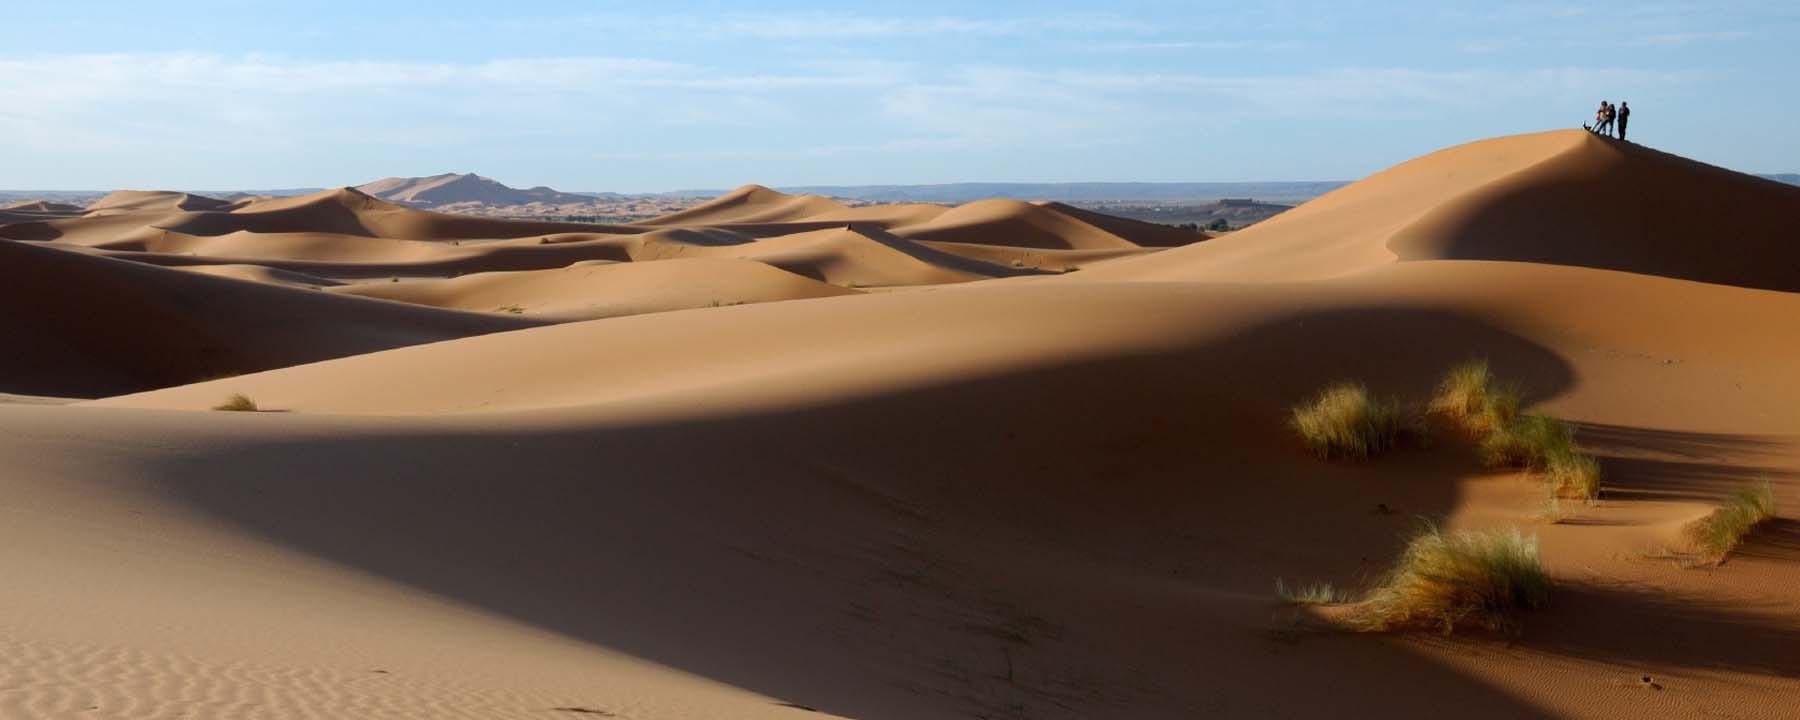 Erg Chebbi desert Morocco Merzouga dunes_Source- iStock